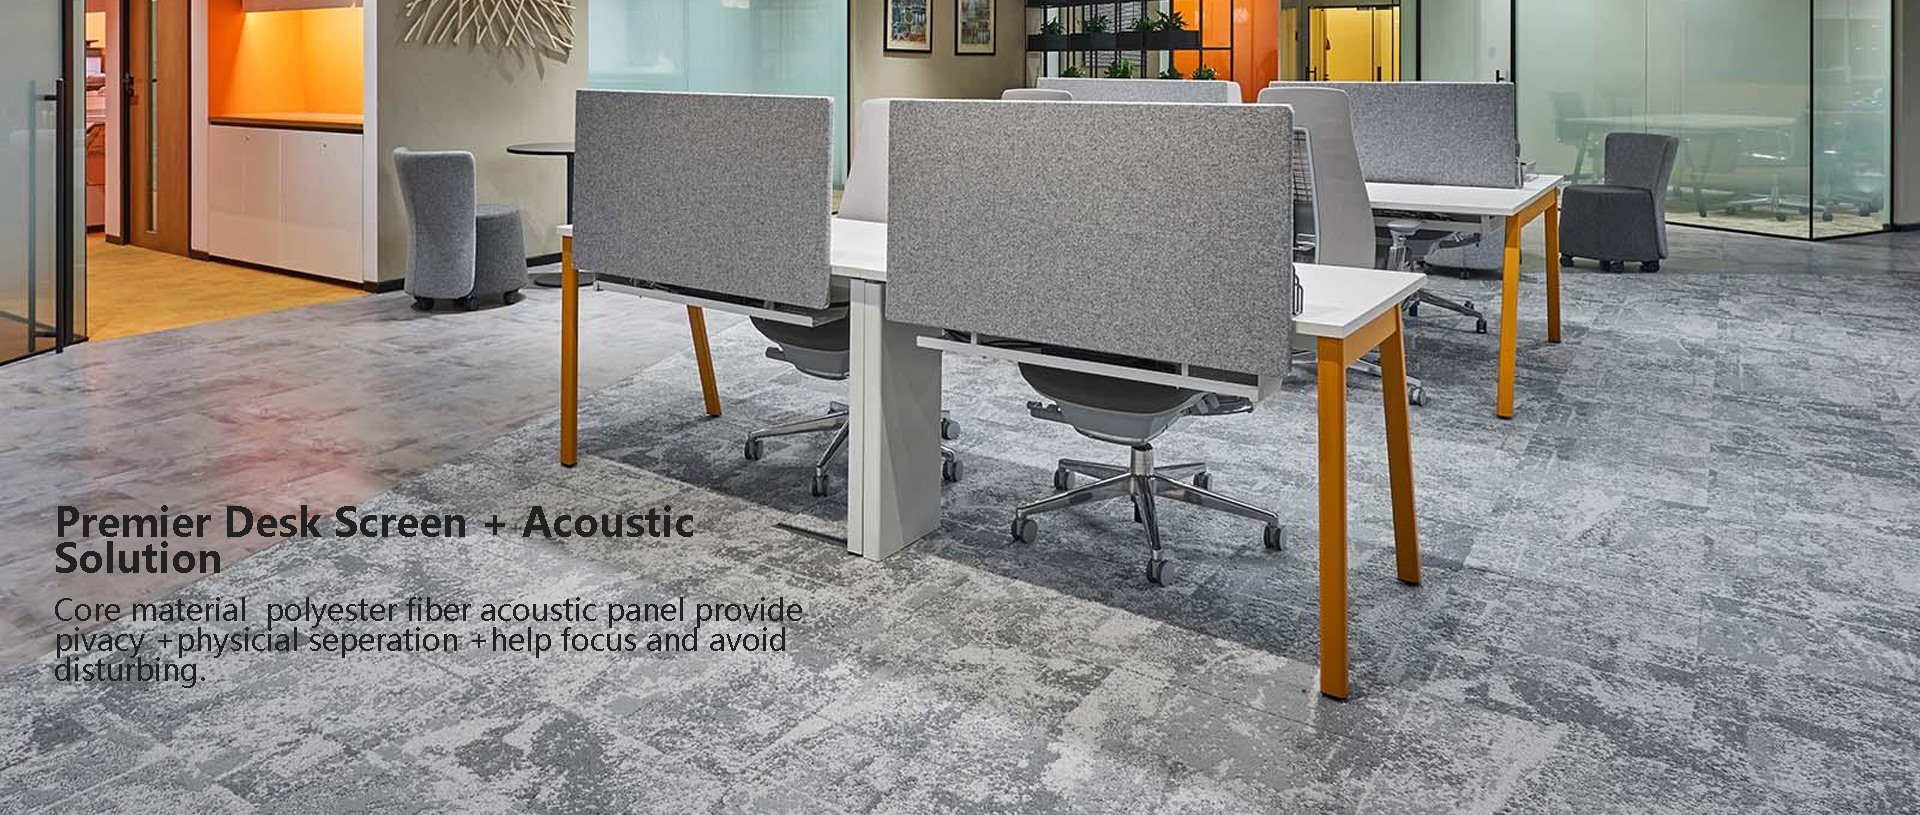 Acoustic desk screen-core materials polyester fiber acoustic panels